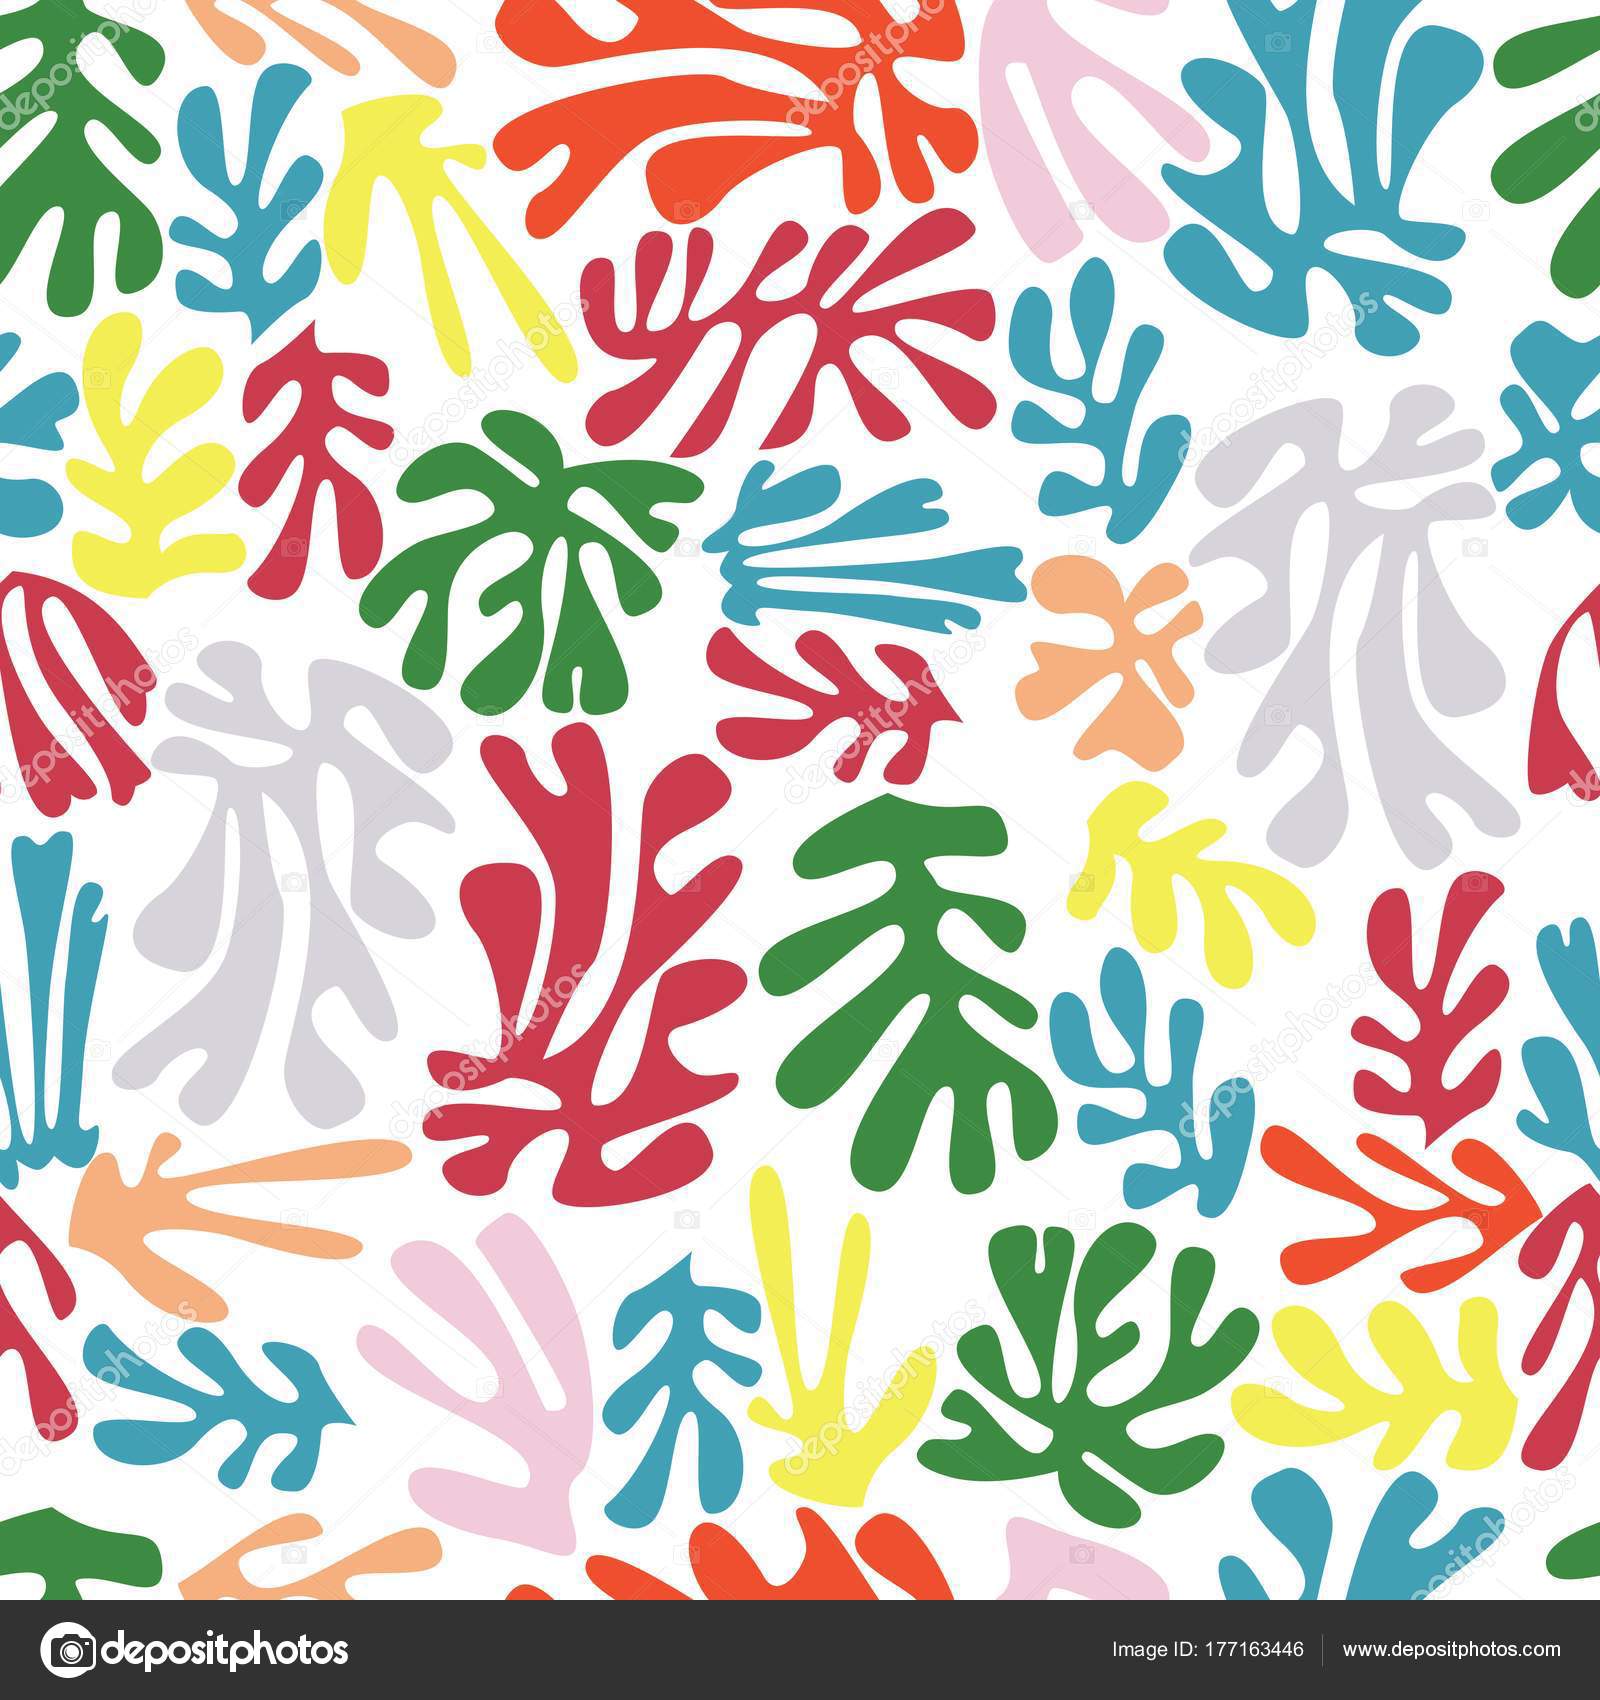 Matisse Inspired Shapes Al EPS PNG No SVG CC0 Public Domain -  Portugal